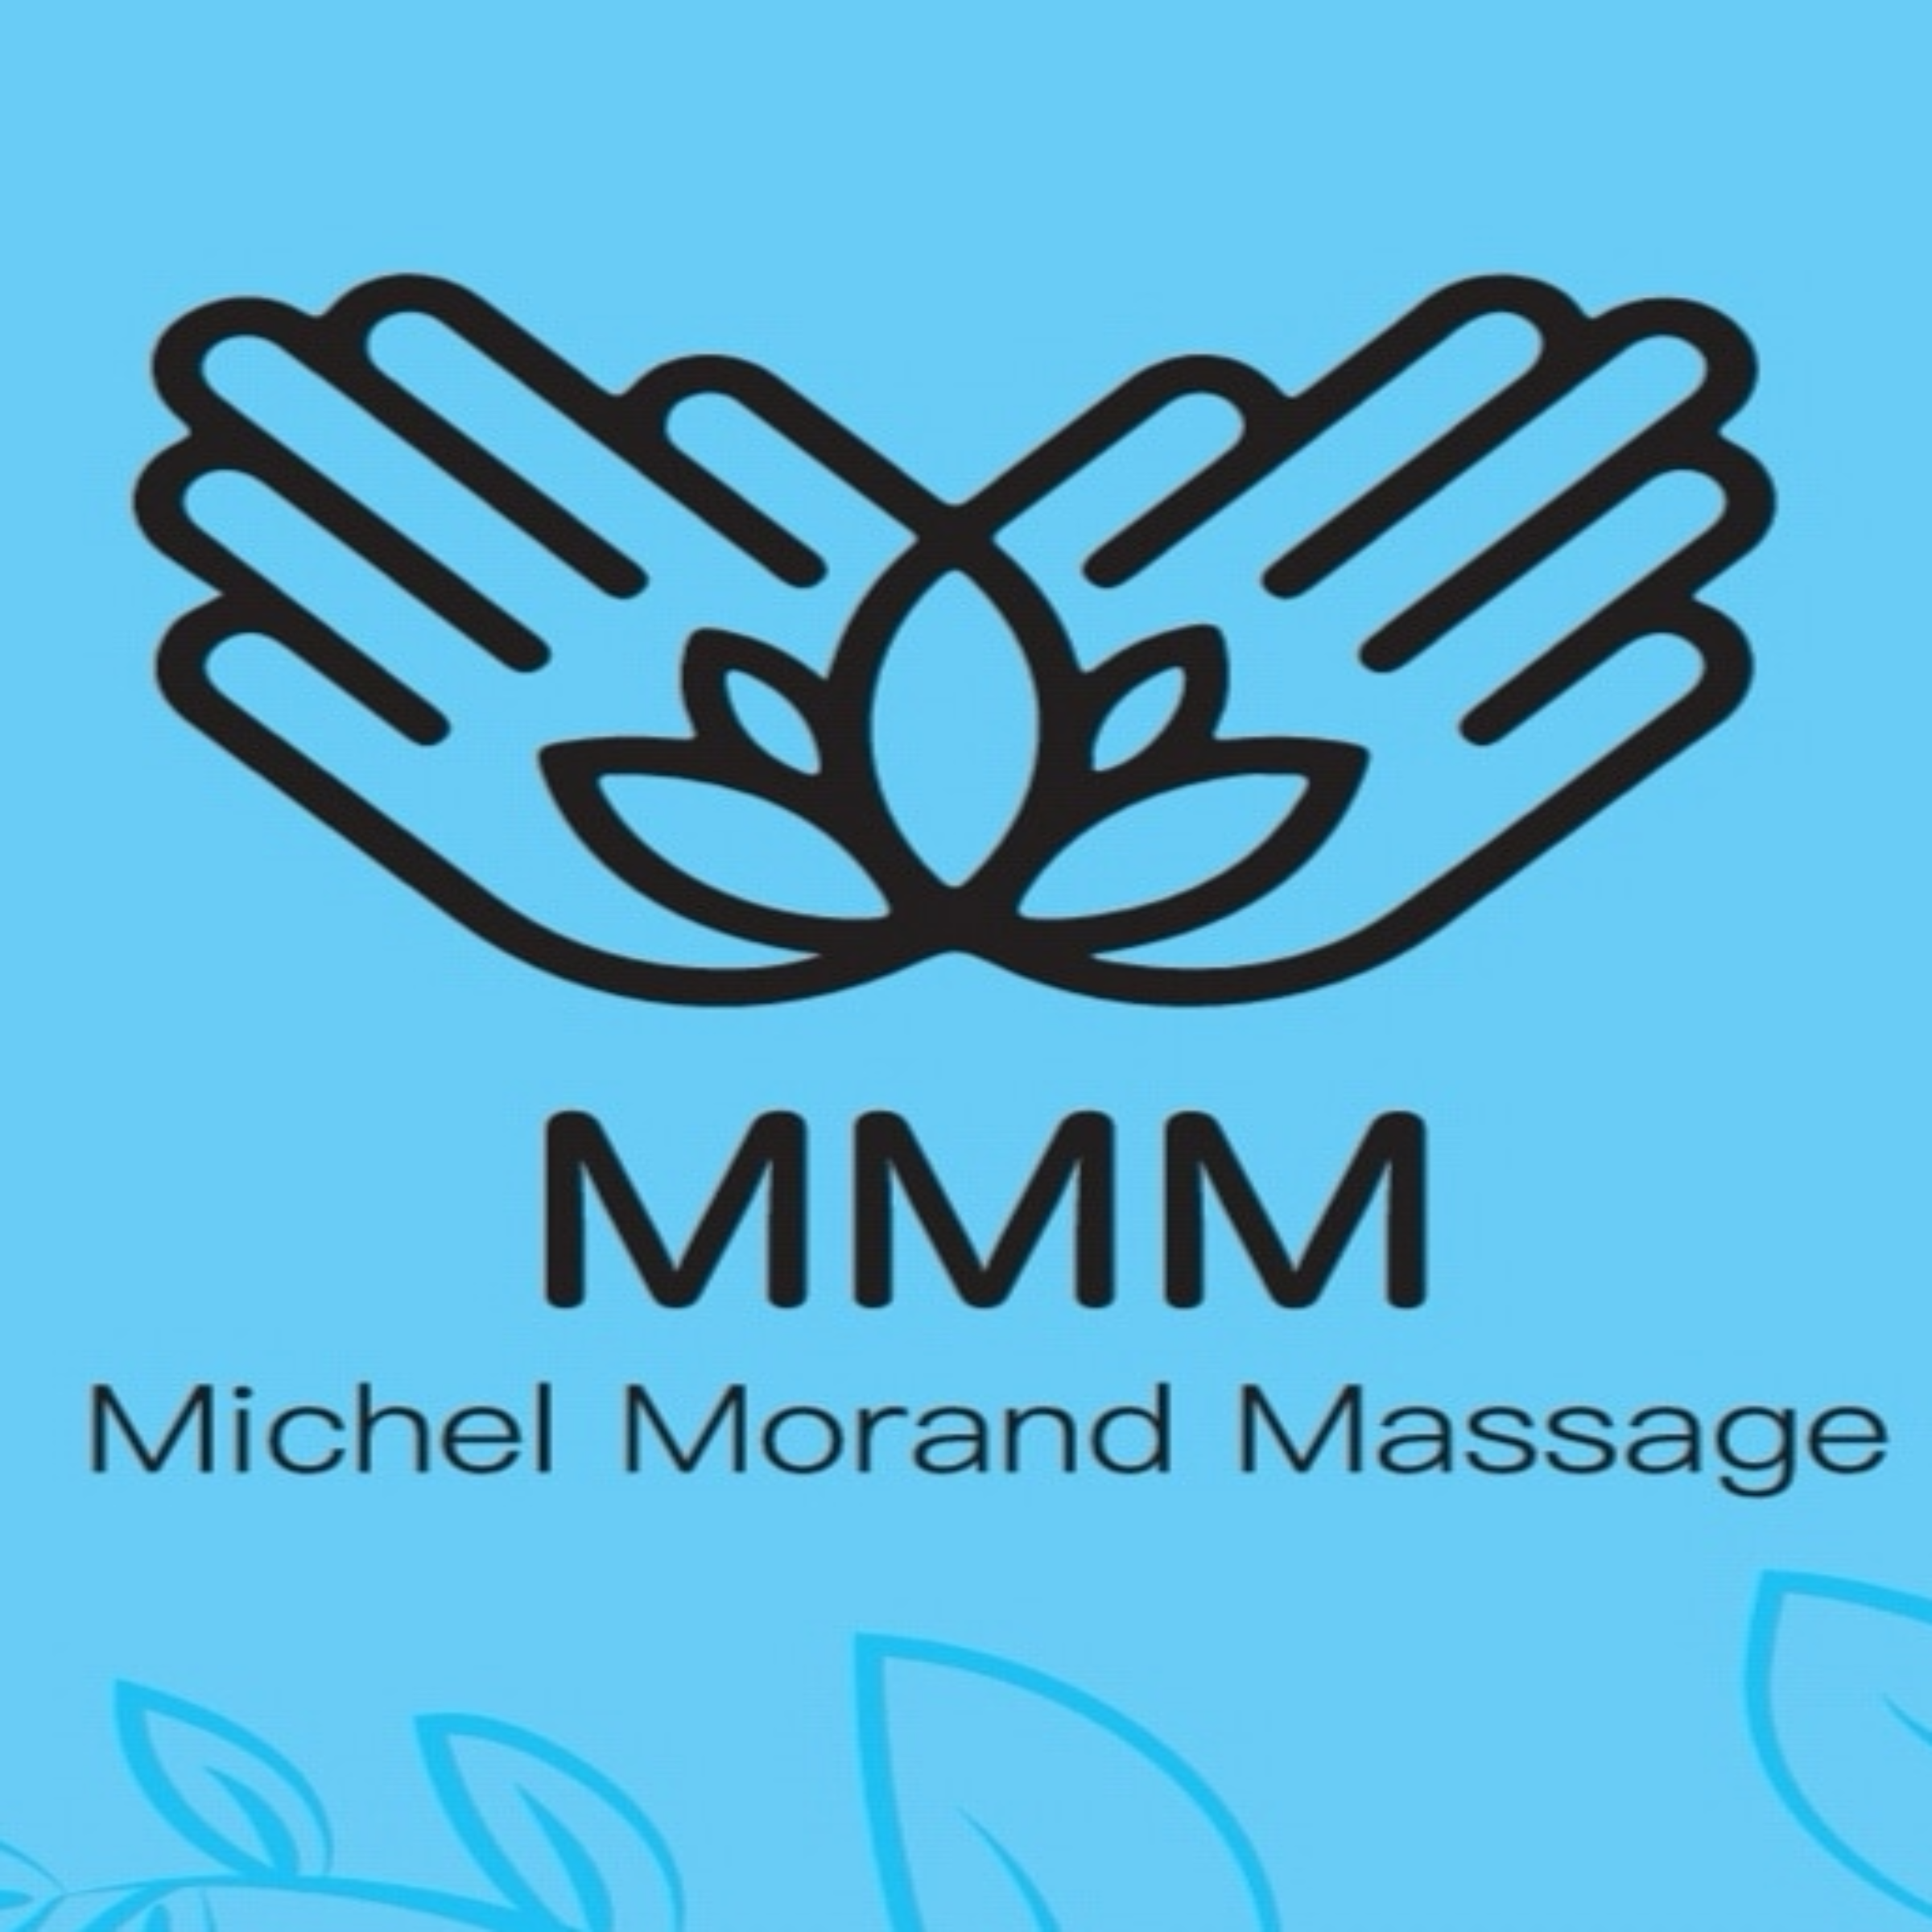 MMM. Michel Morand Massage